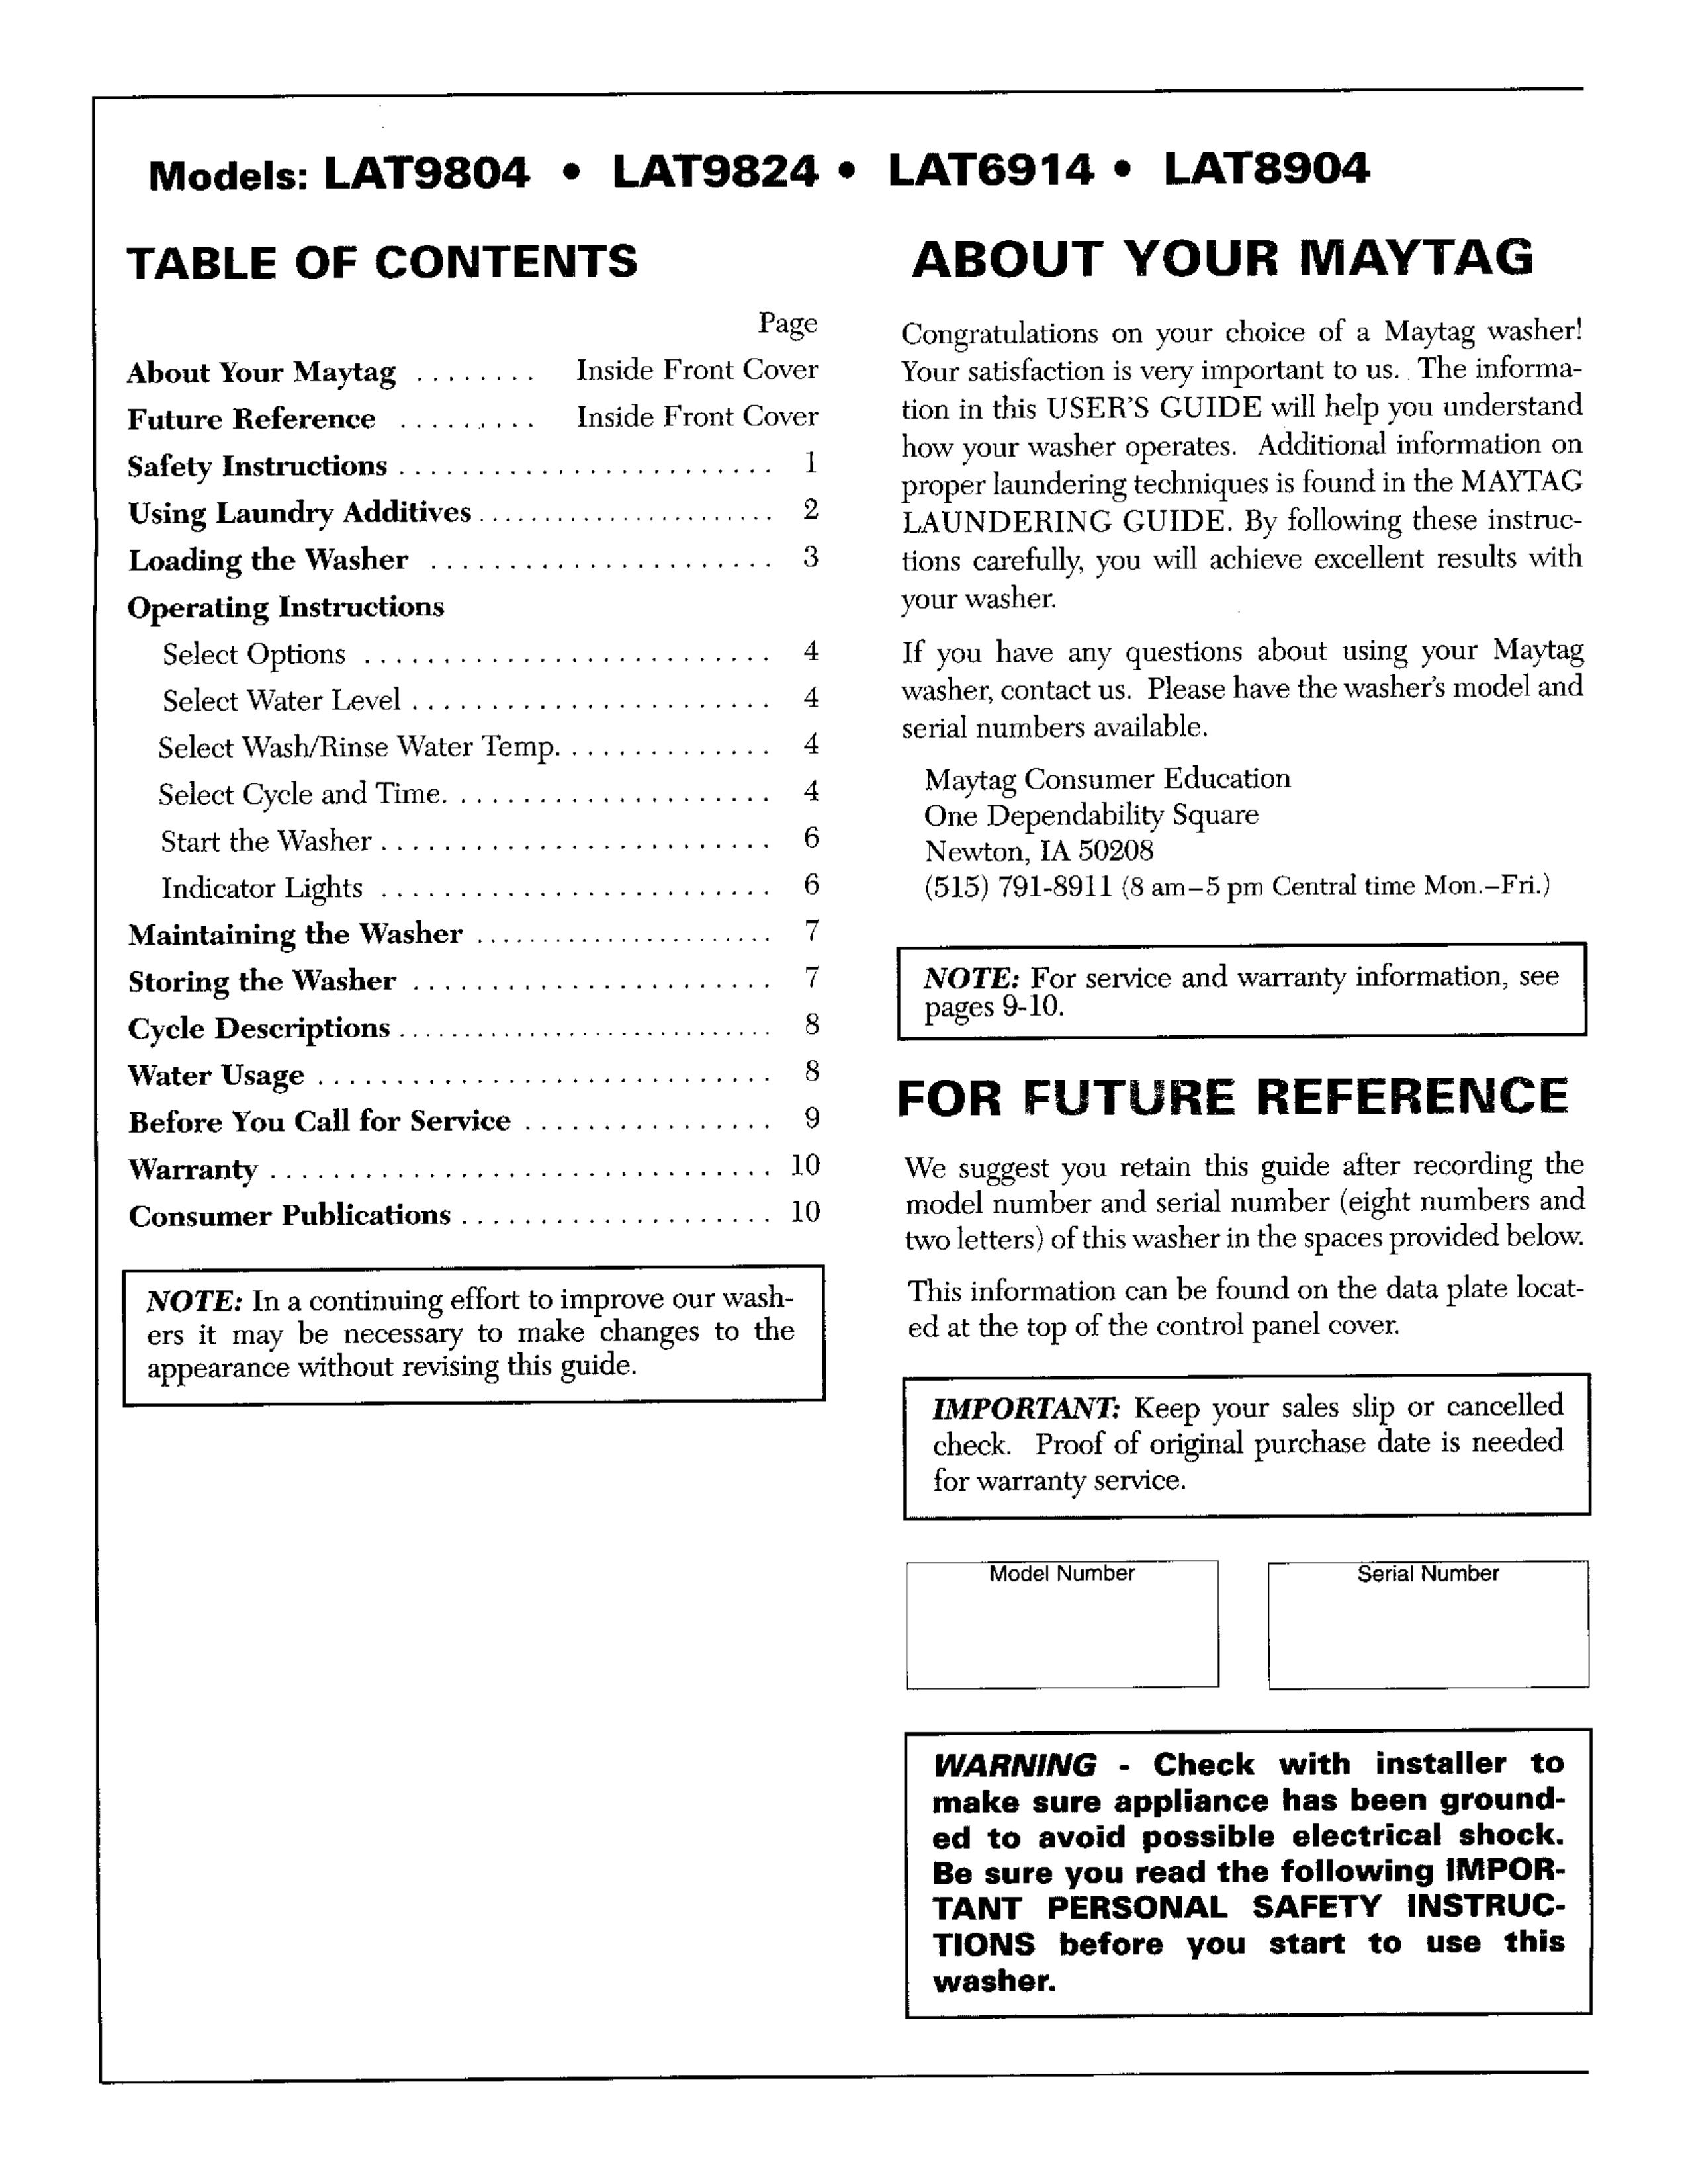 Maytag LAT9804 Washer/Dryer User Manual